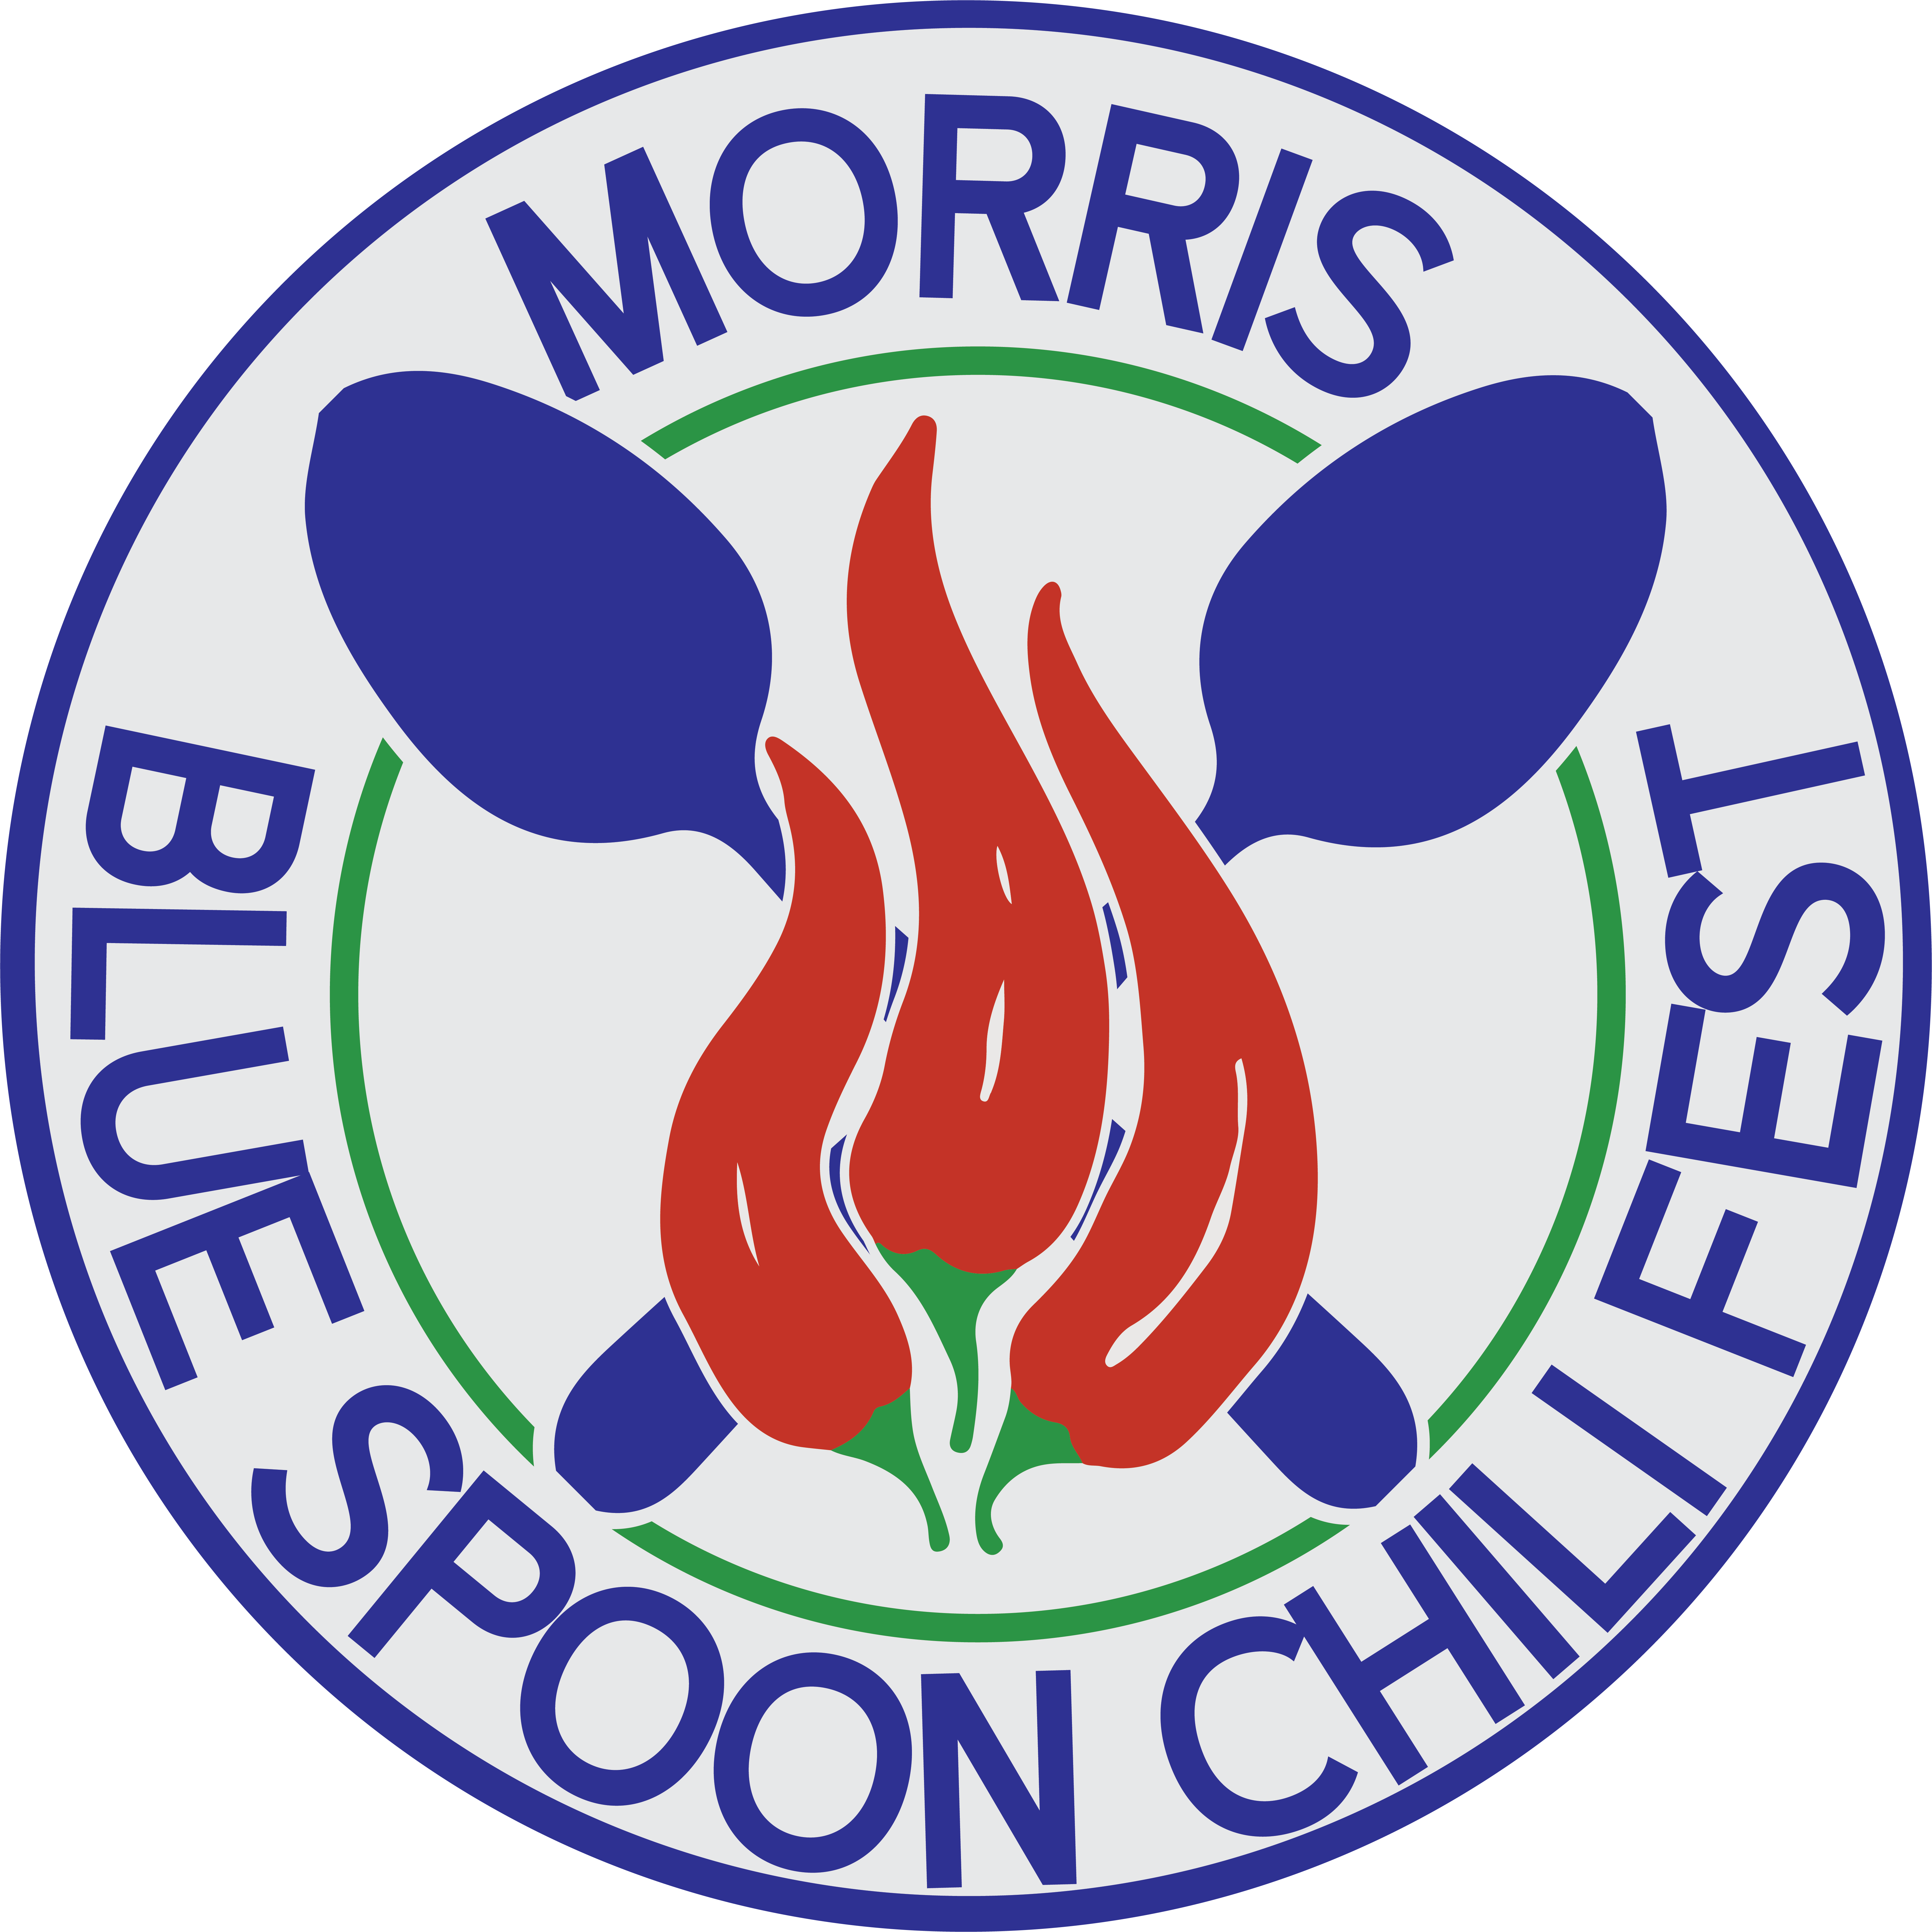 Morris Blue Spoon Chili Fest